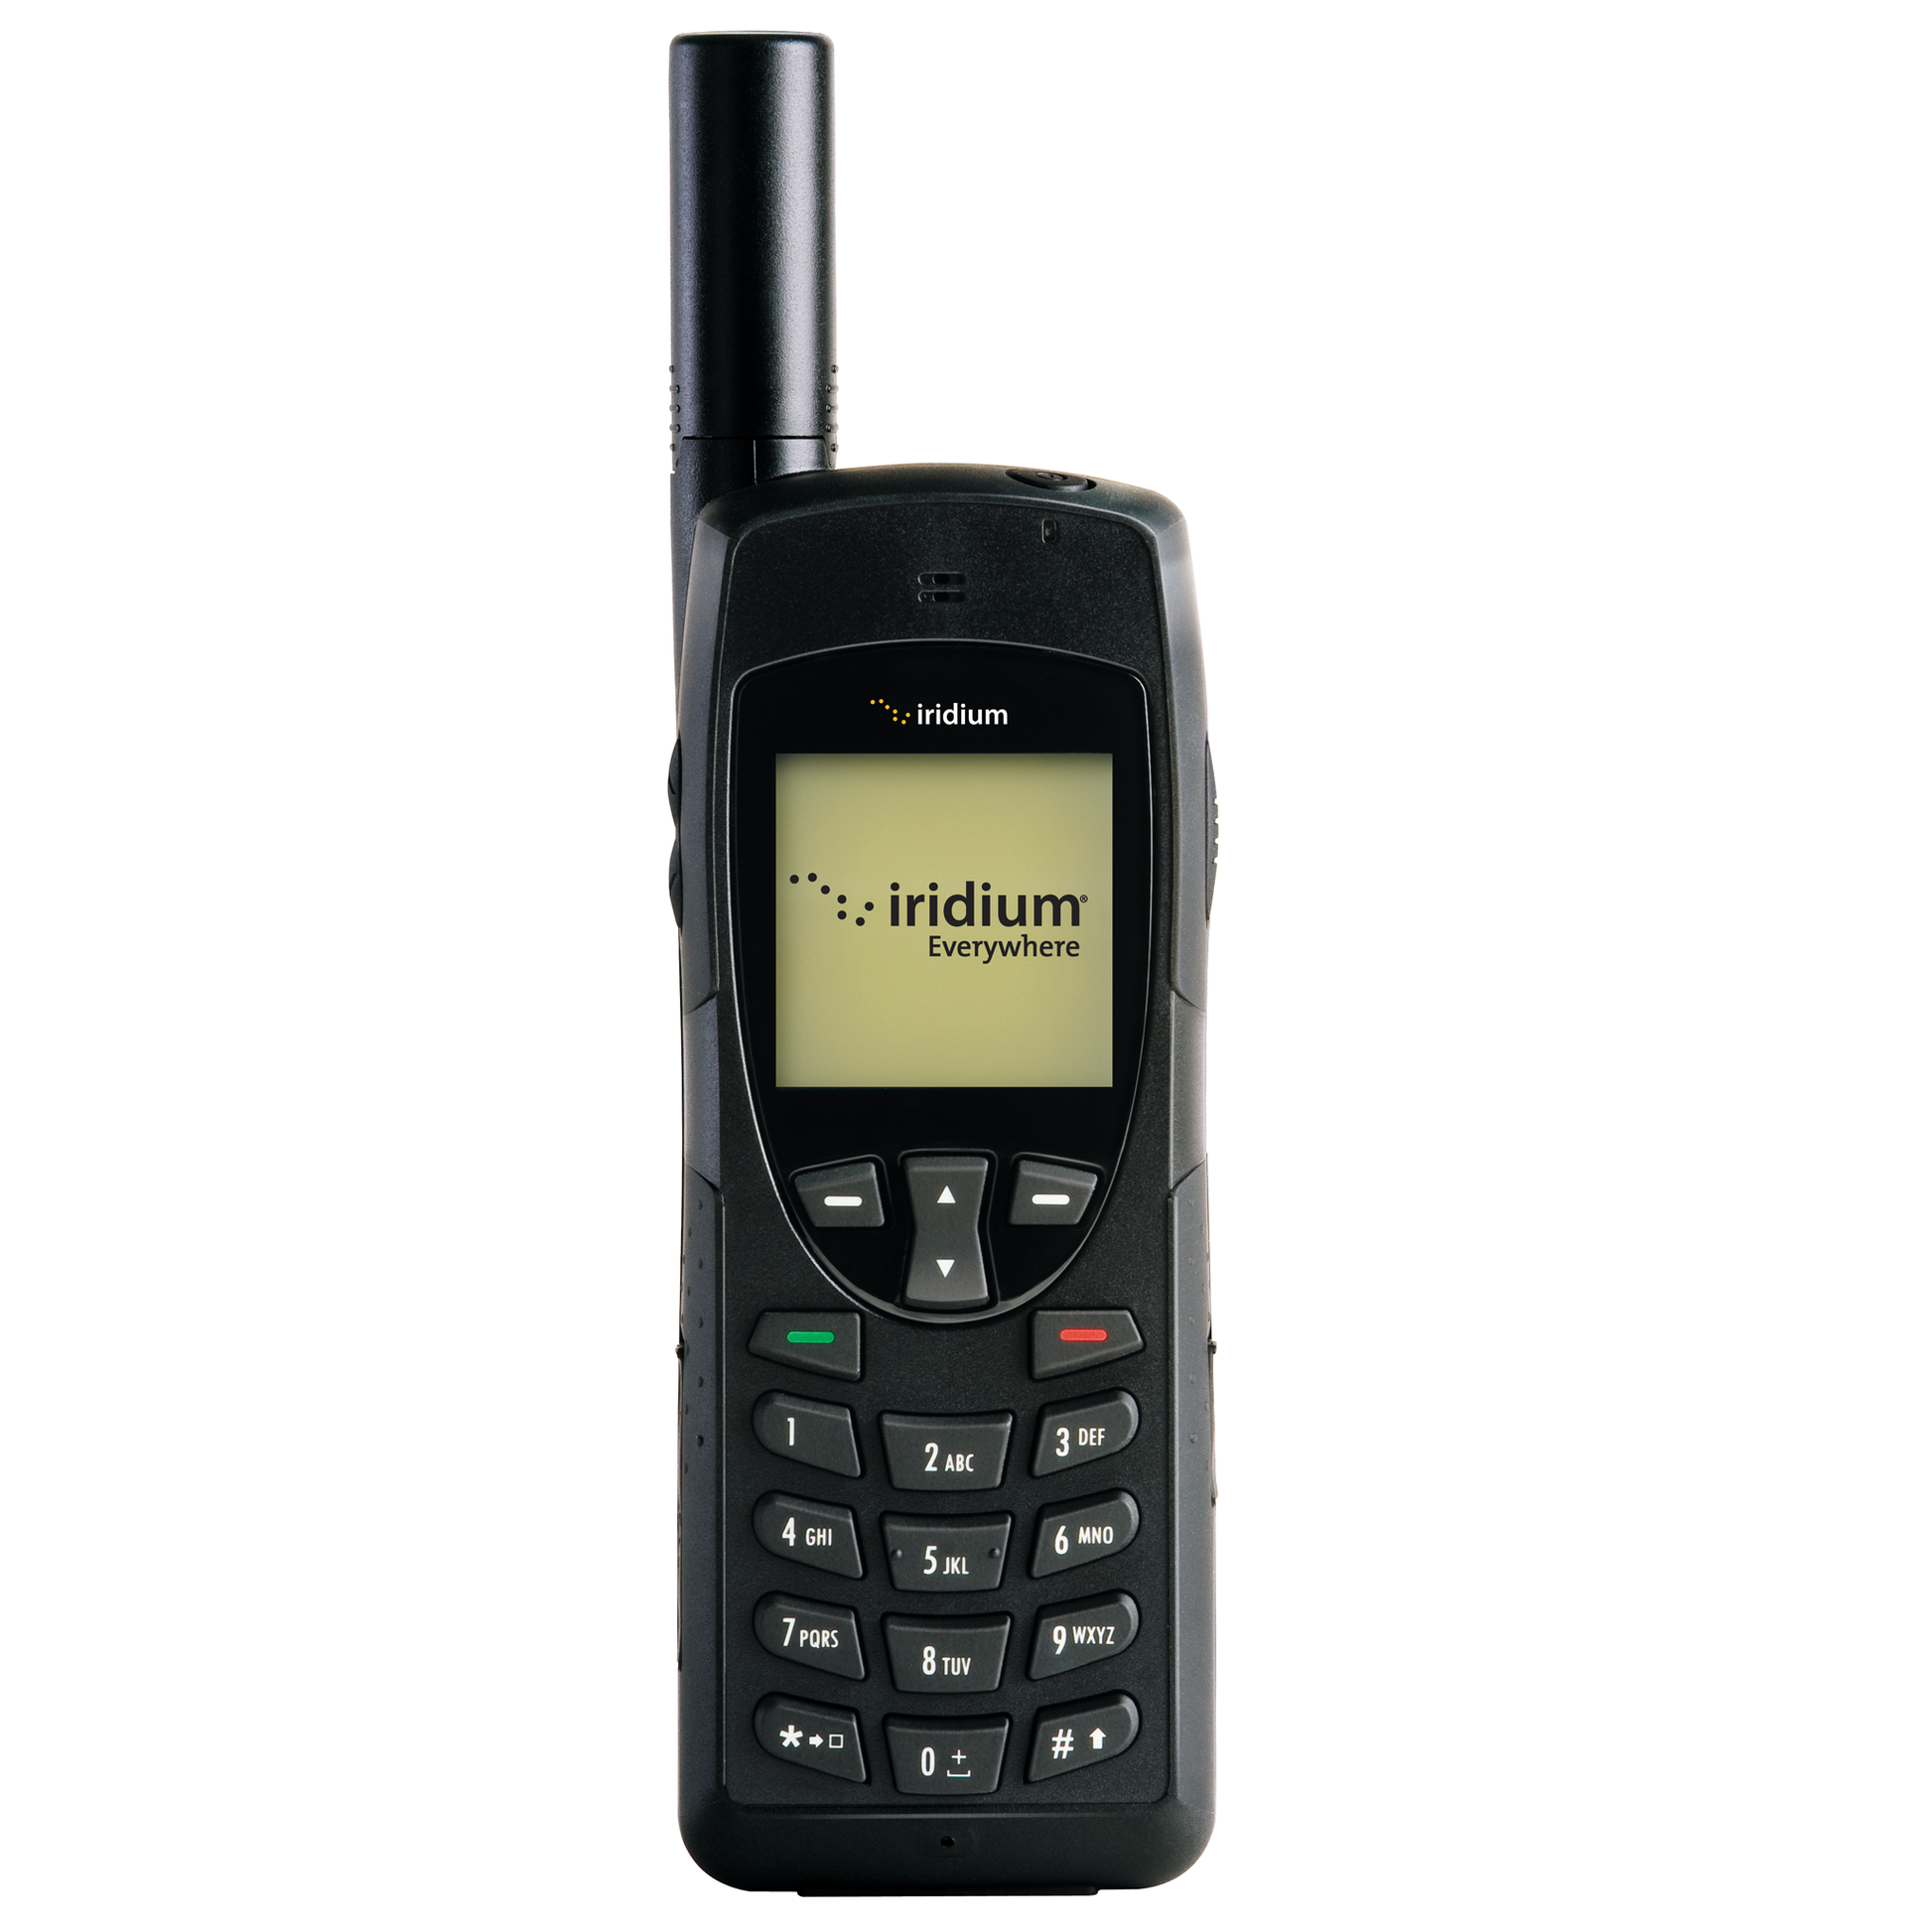 Iridio 9555 Satellite teléfono con accesorios y tarjeta SIM prepago